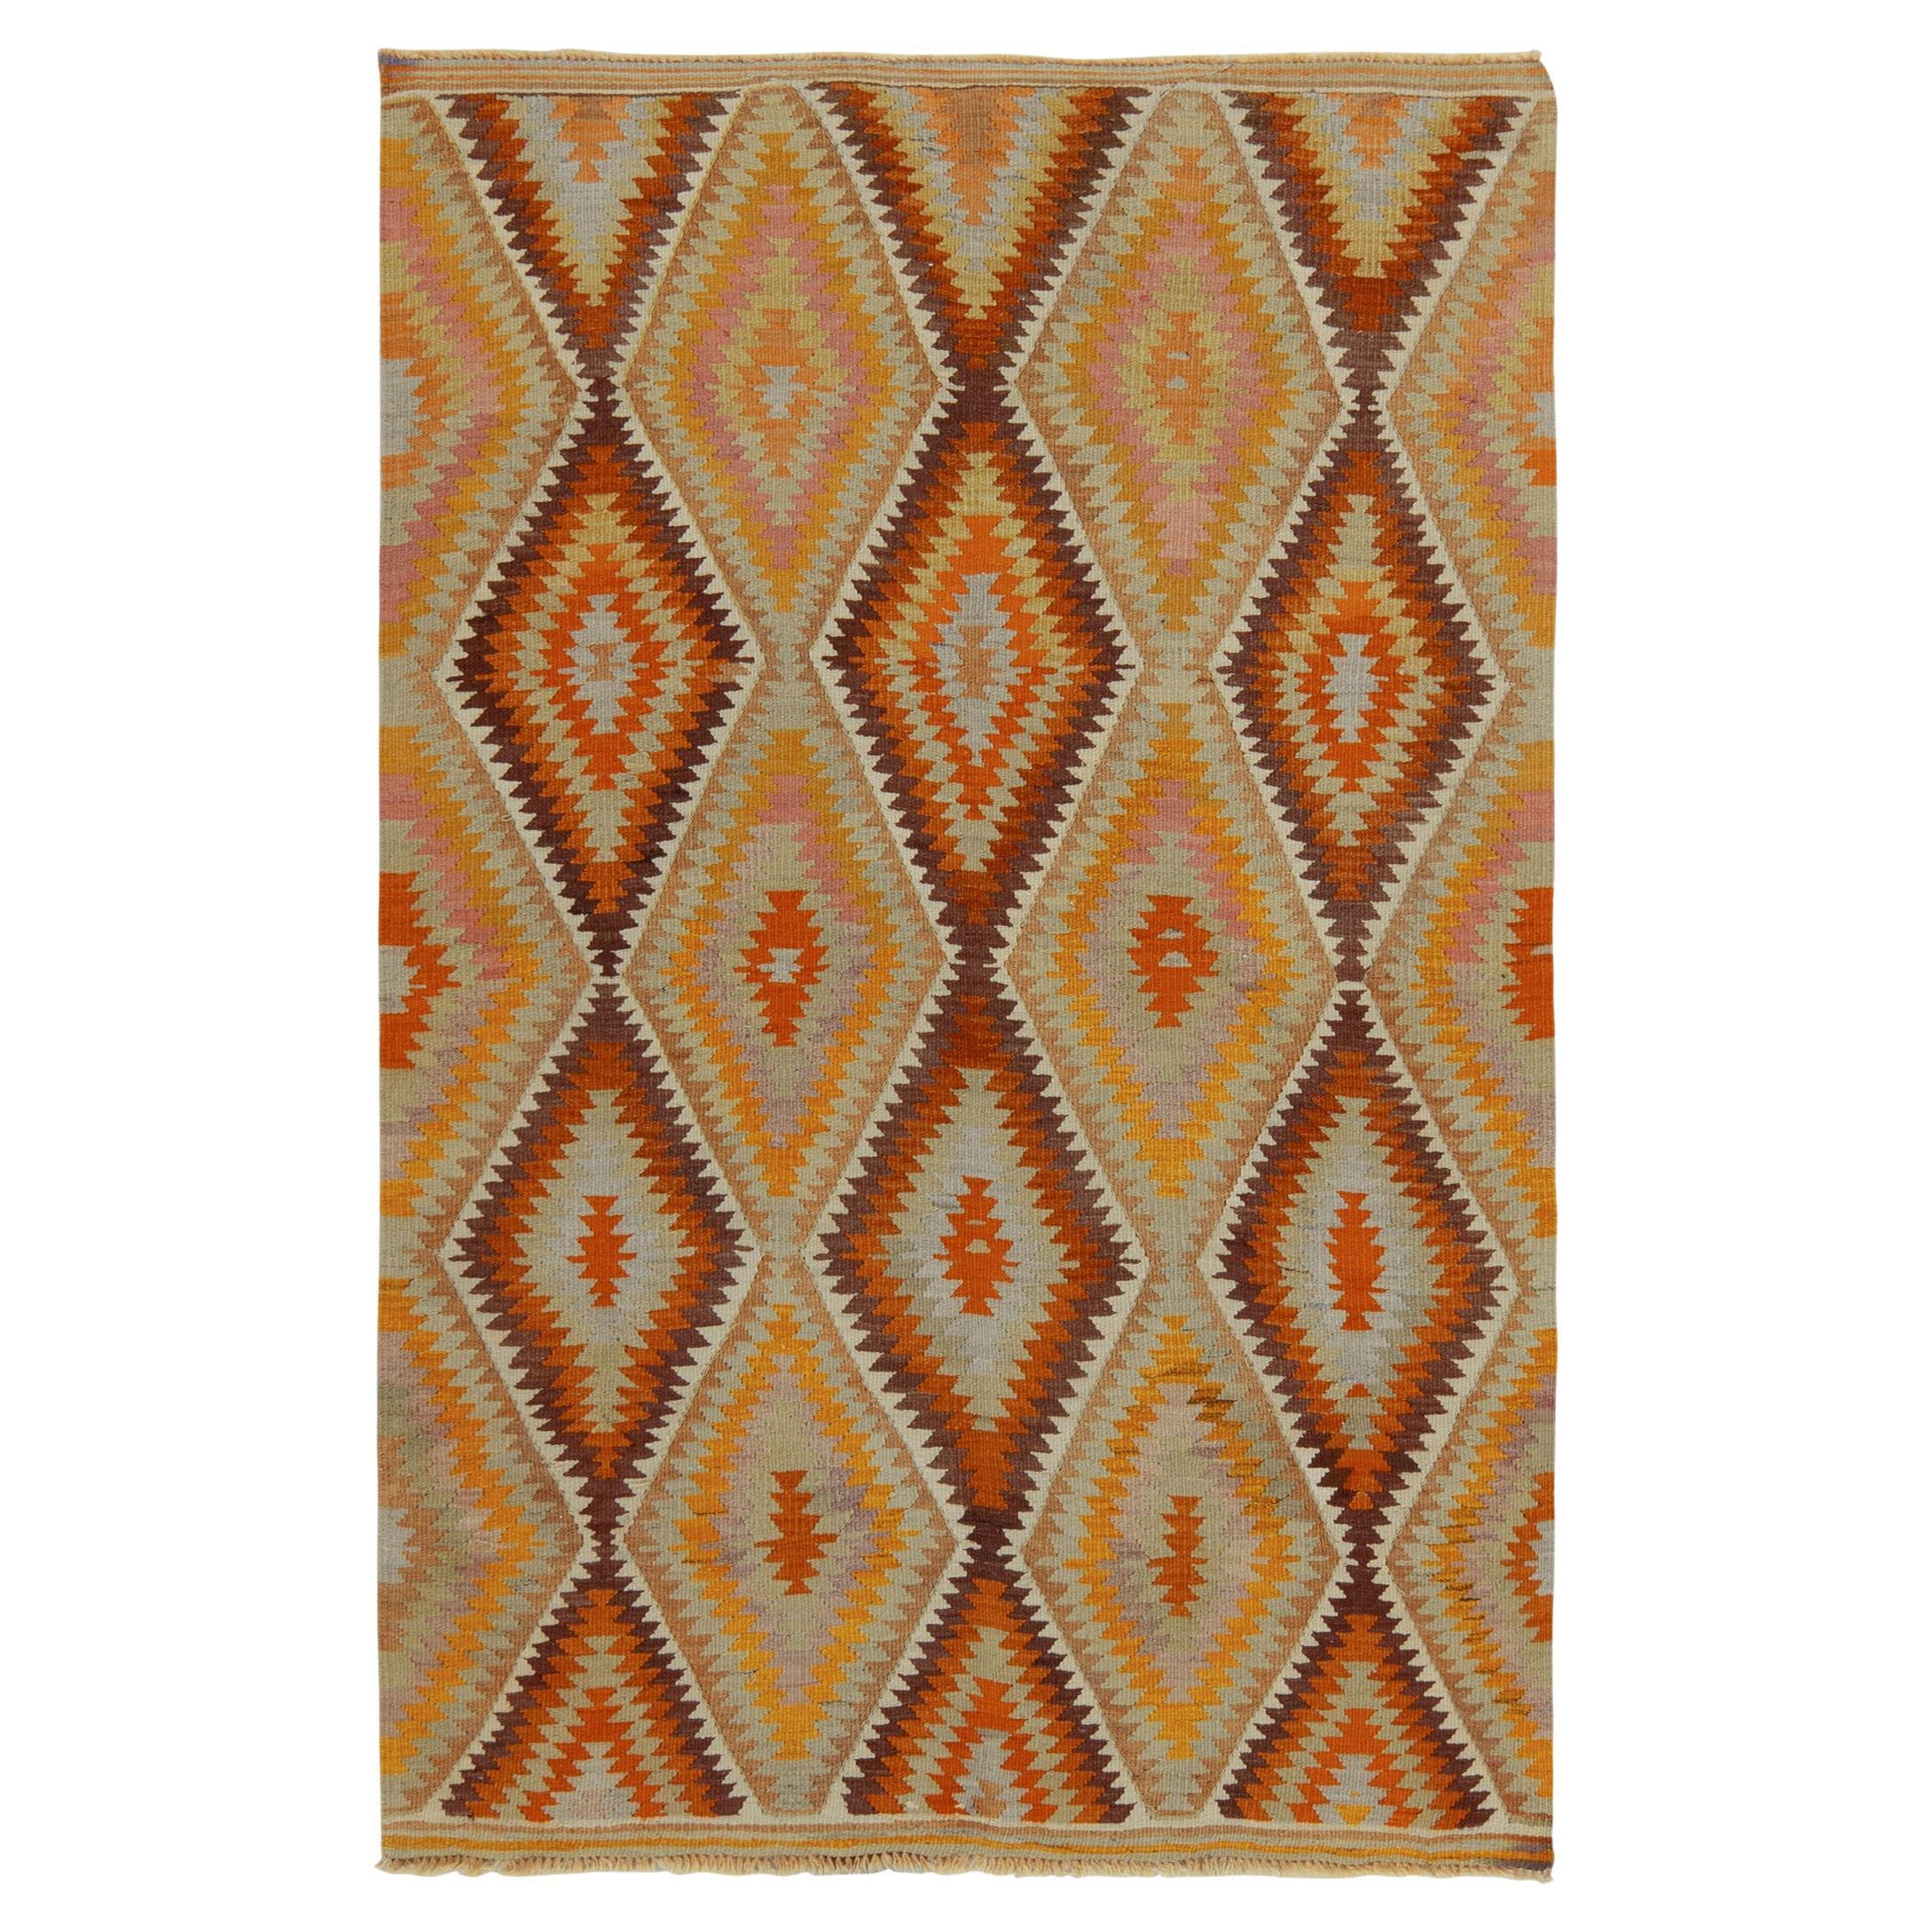 1950s Vintage Turkish Kilim rug in Orange, Gold Geometric Pattern by Rug & Kilim For Sale